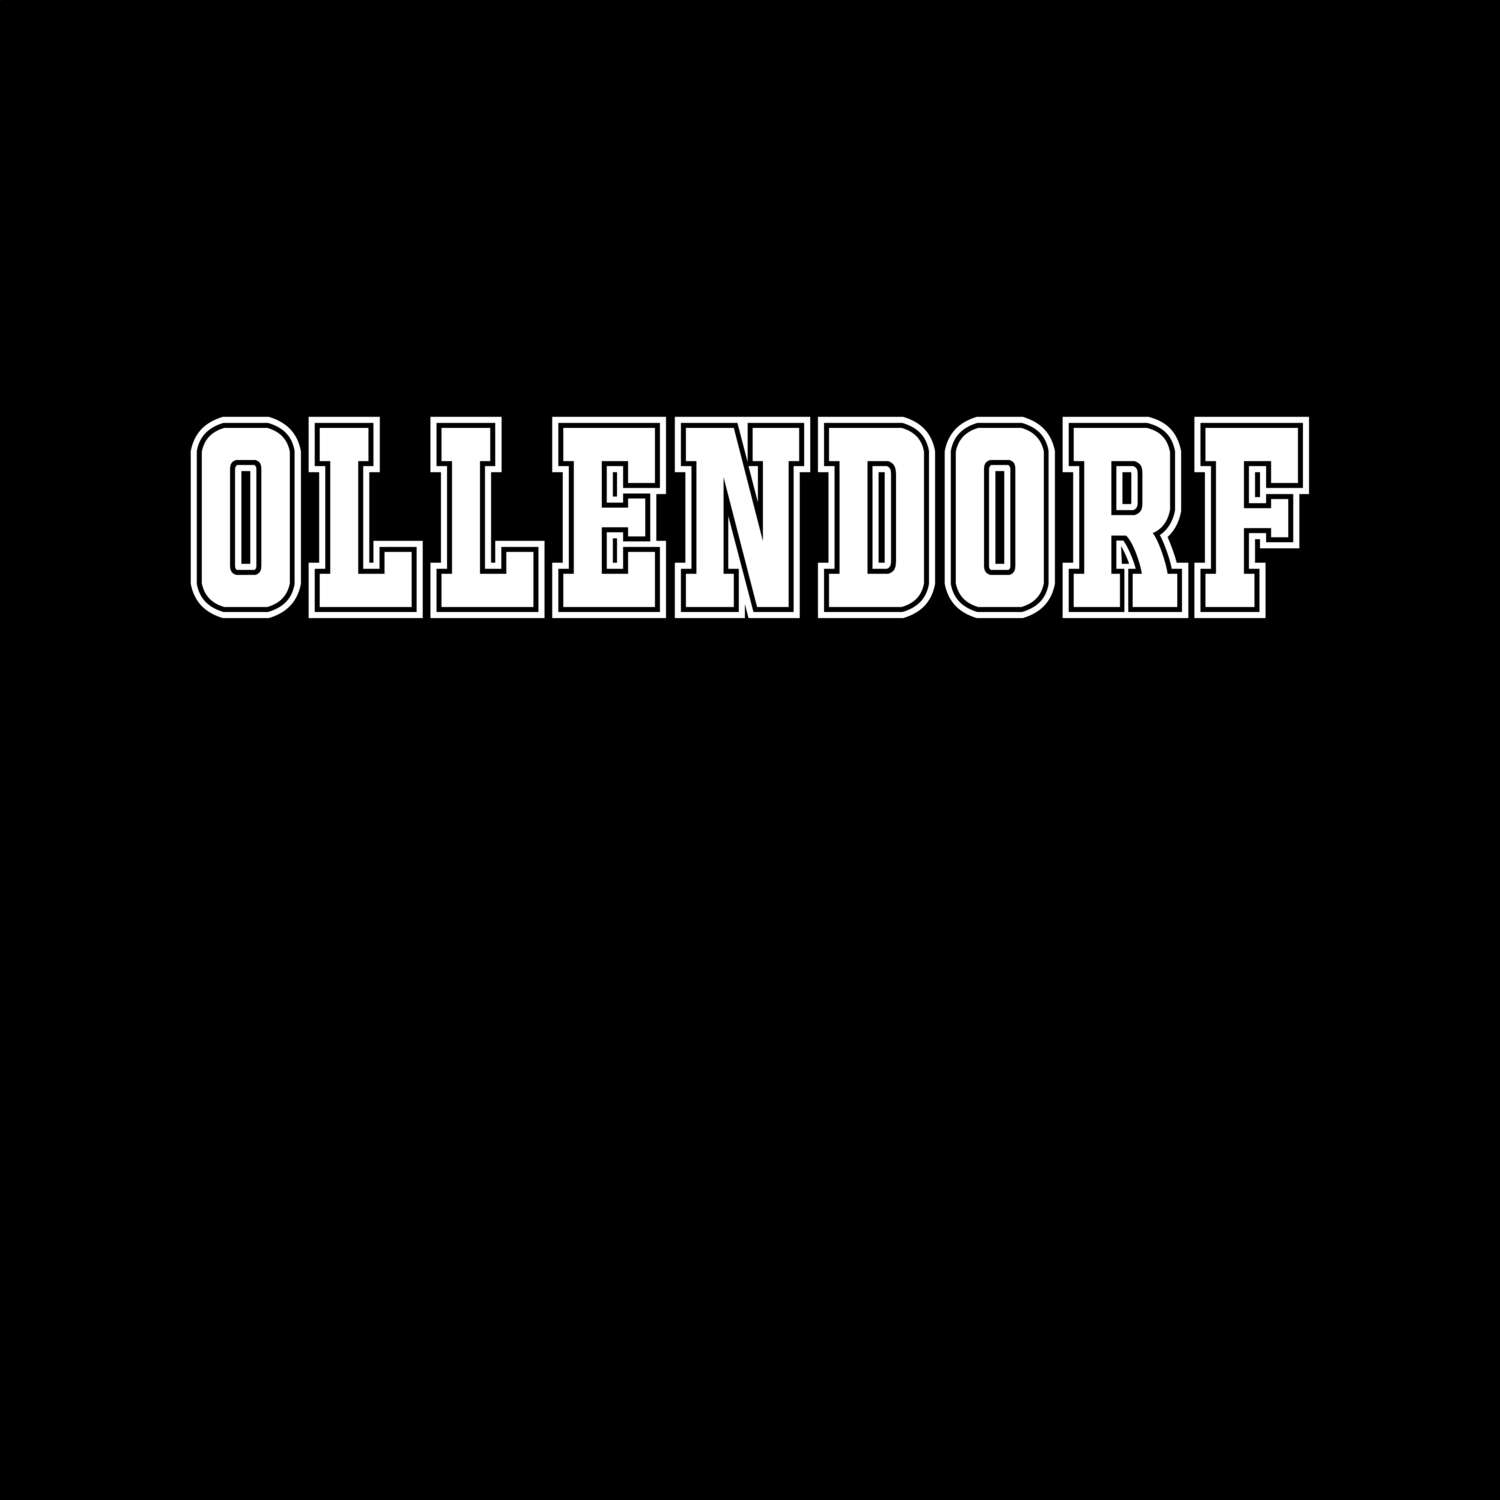 Ollendorf T-Shirt »Classic«